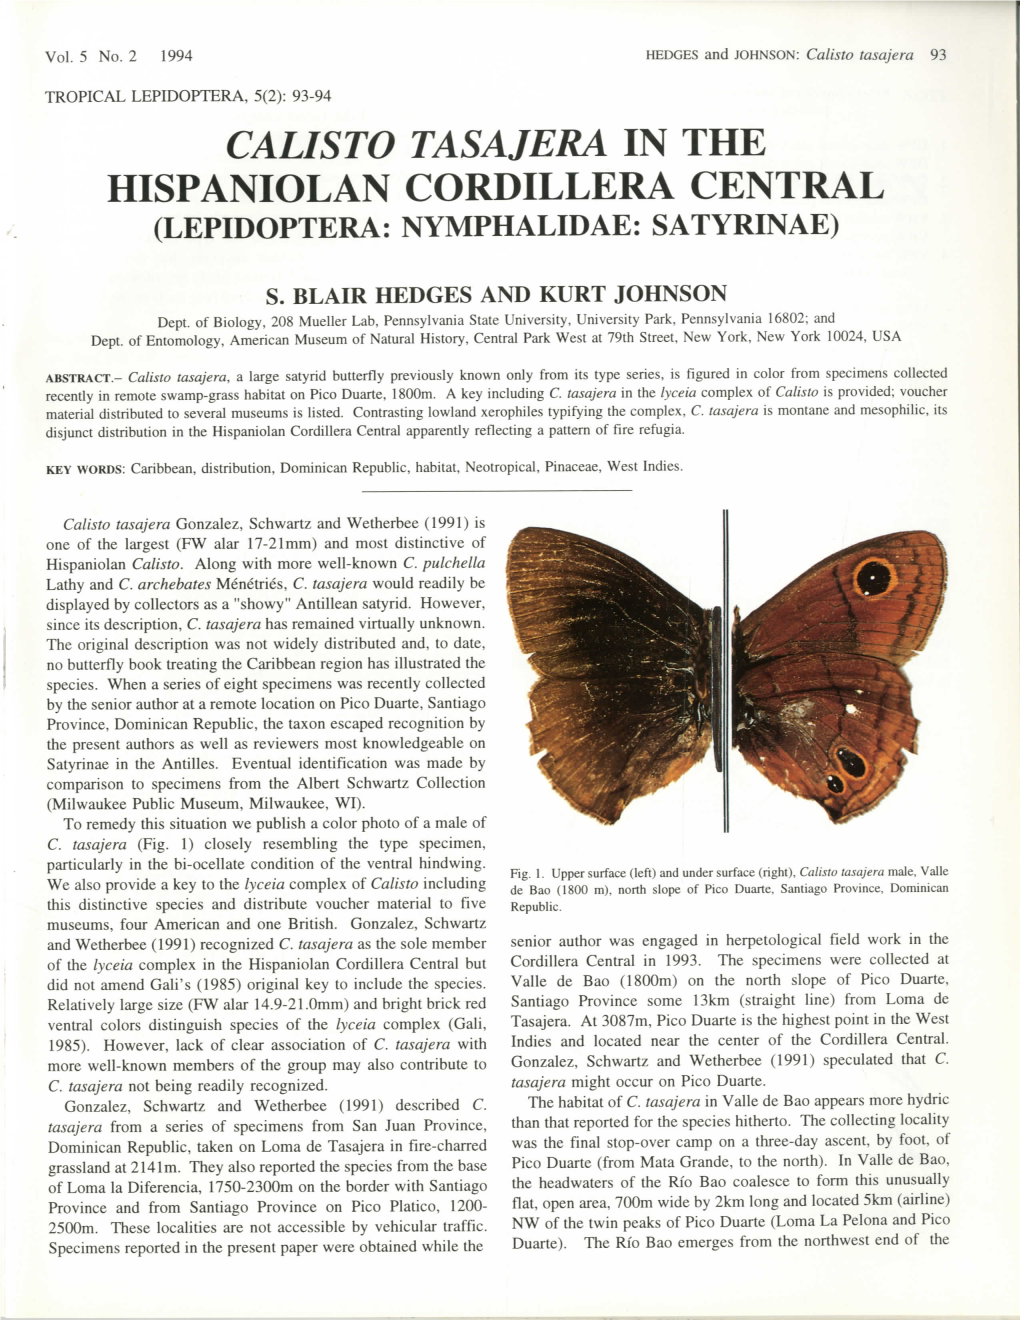 Calisto Tasajera in the Hispaniolan Cordillera Central (Lepidoptera: Nymphalidae: Satyrinae)